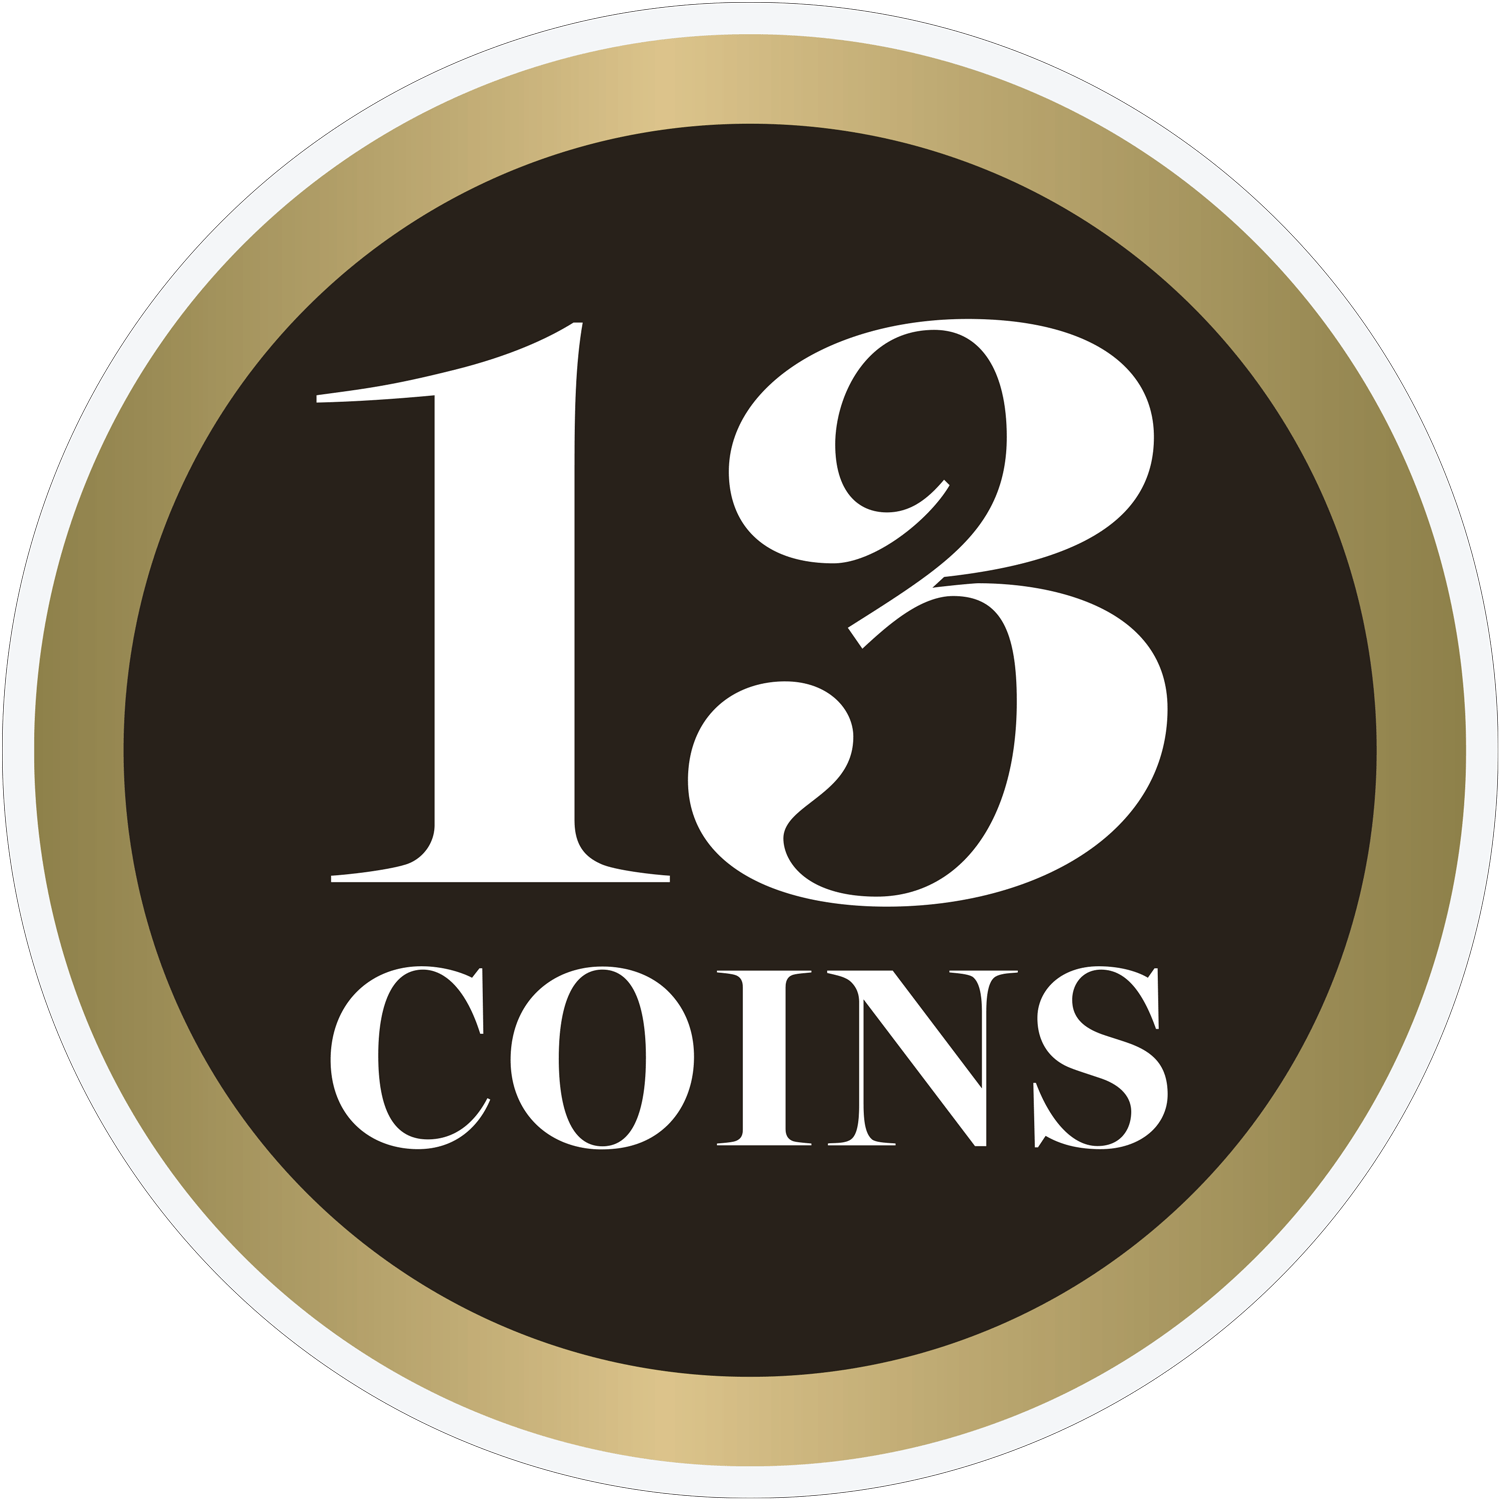 13 Coins Home